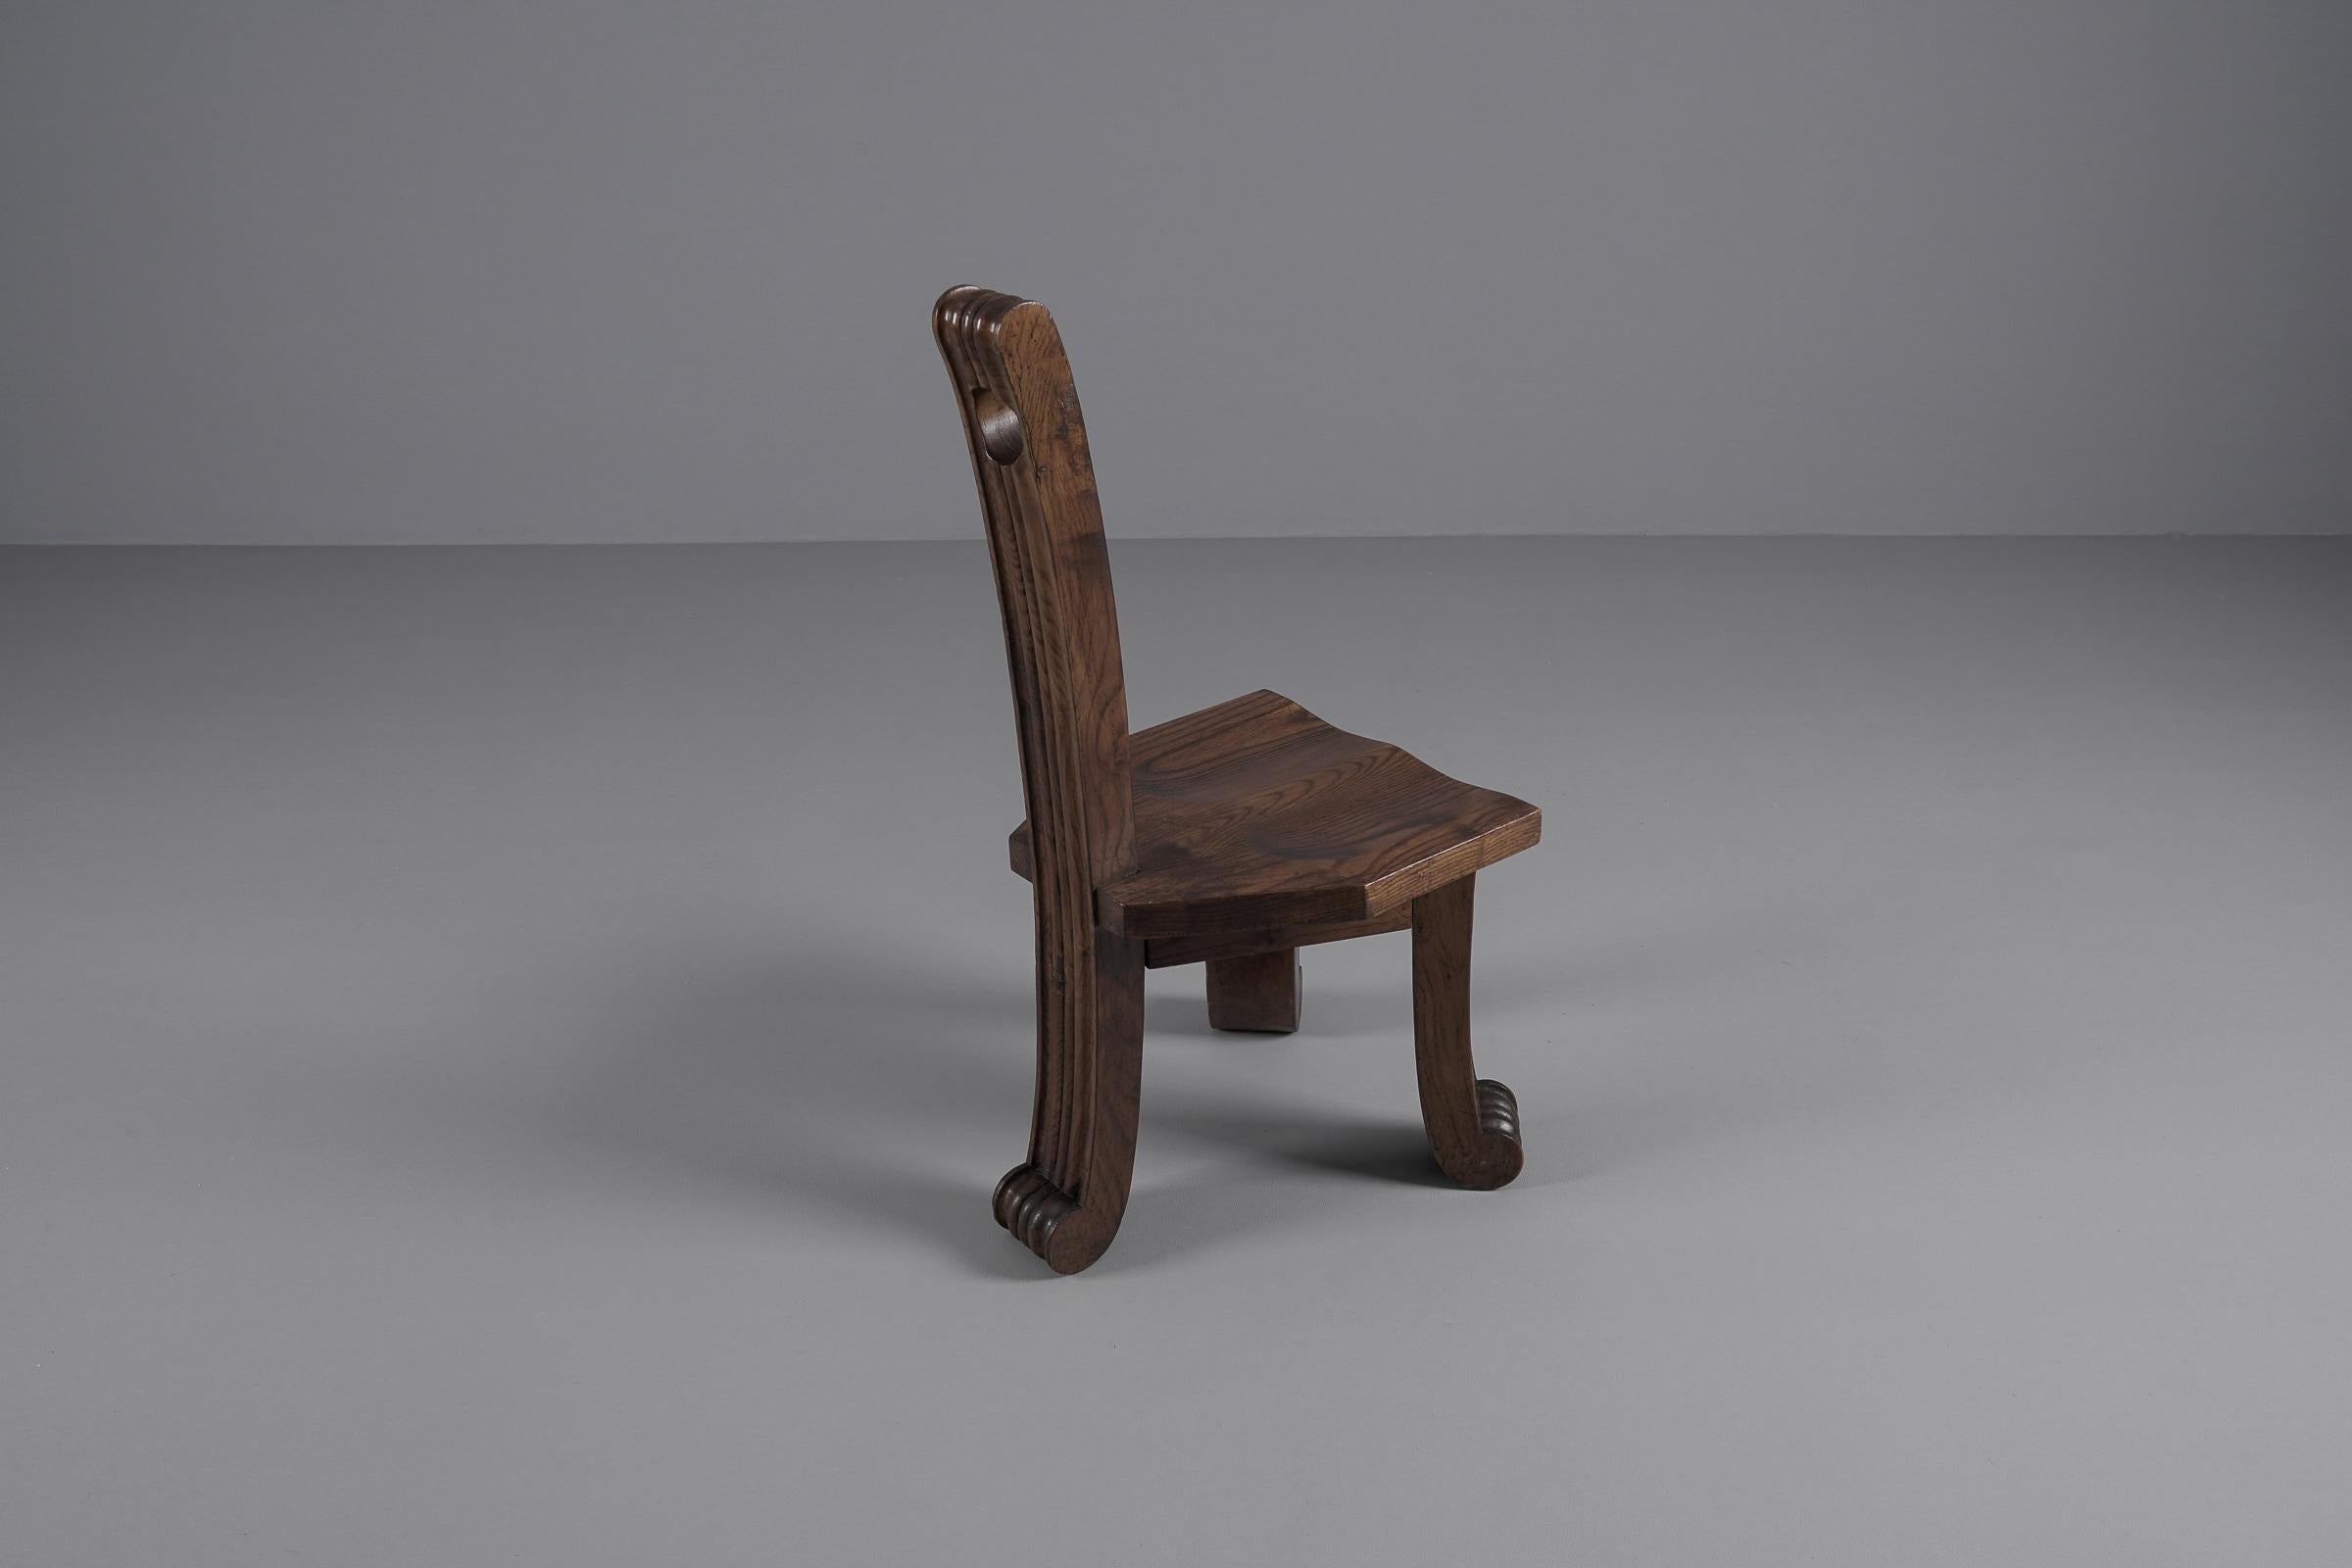 Primitive Rustic Britalist Modern Sculptured Chair, 1940s Europe 3